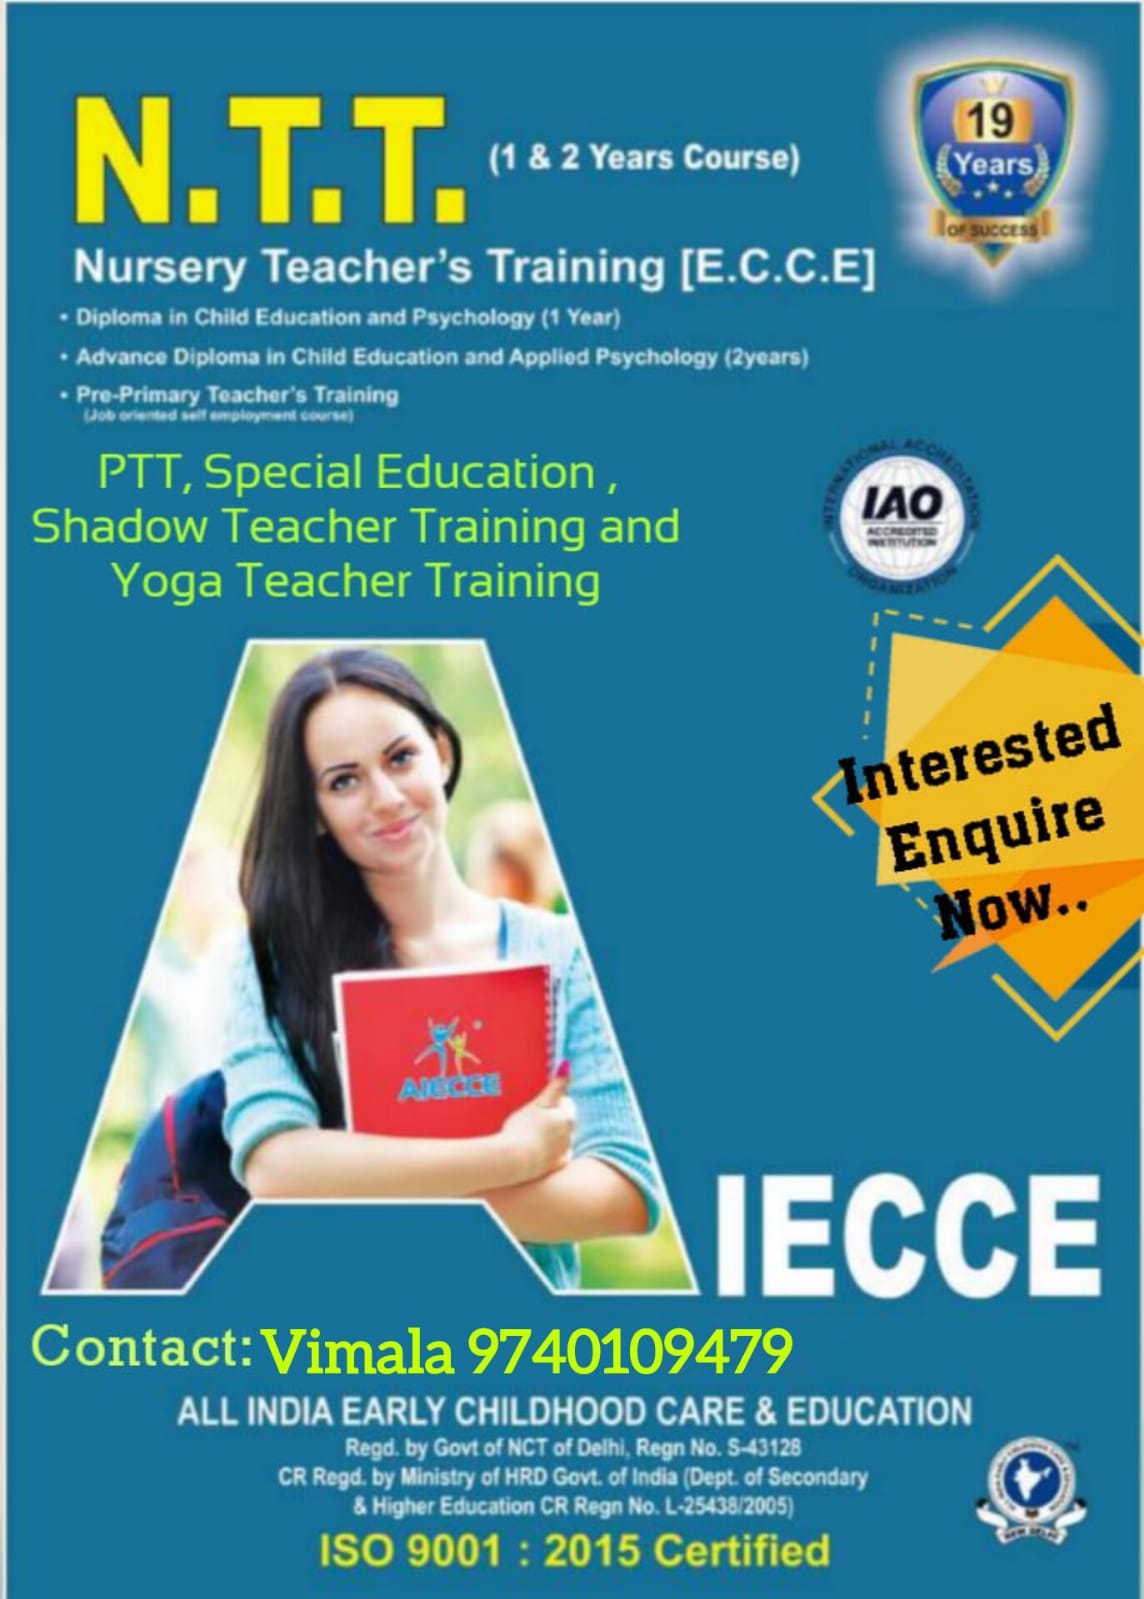 NTT teachers training